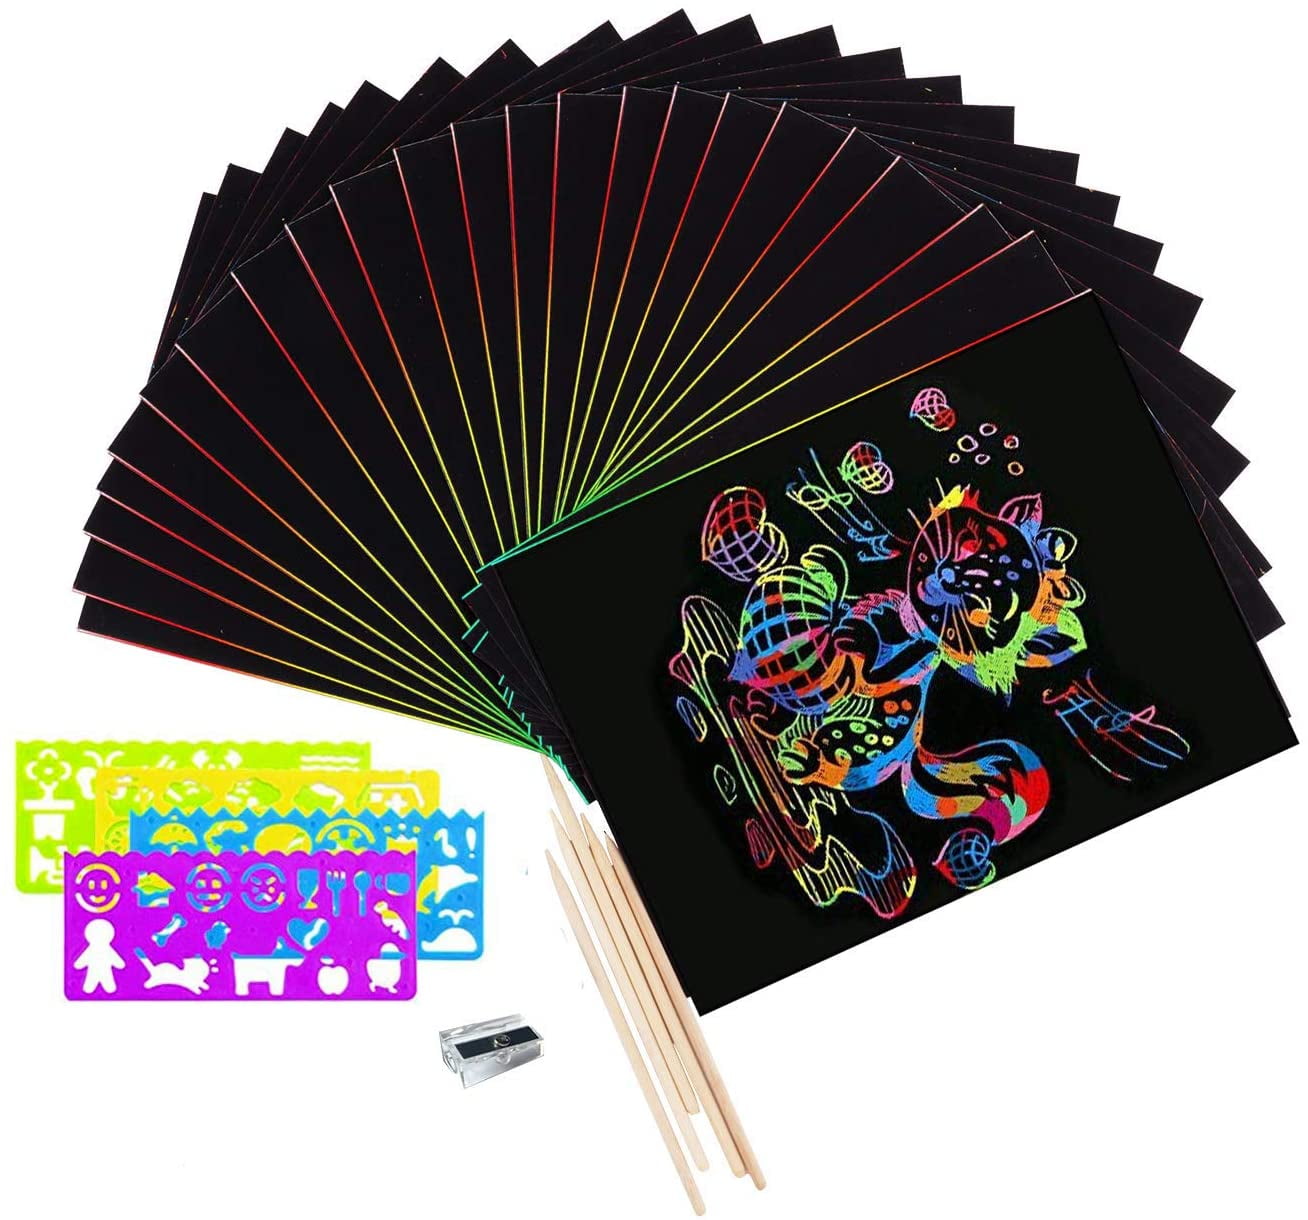 50 Sheets 32K Scratch Art for Kids Crafts Black Magic Art Notes Paper Boards US 